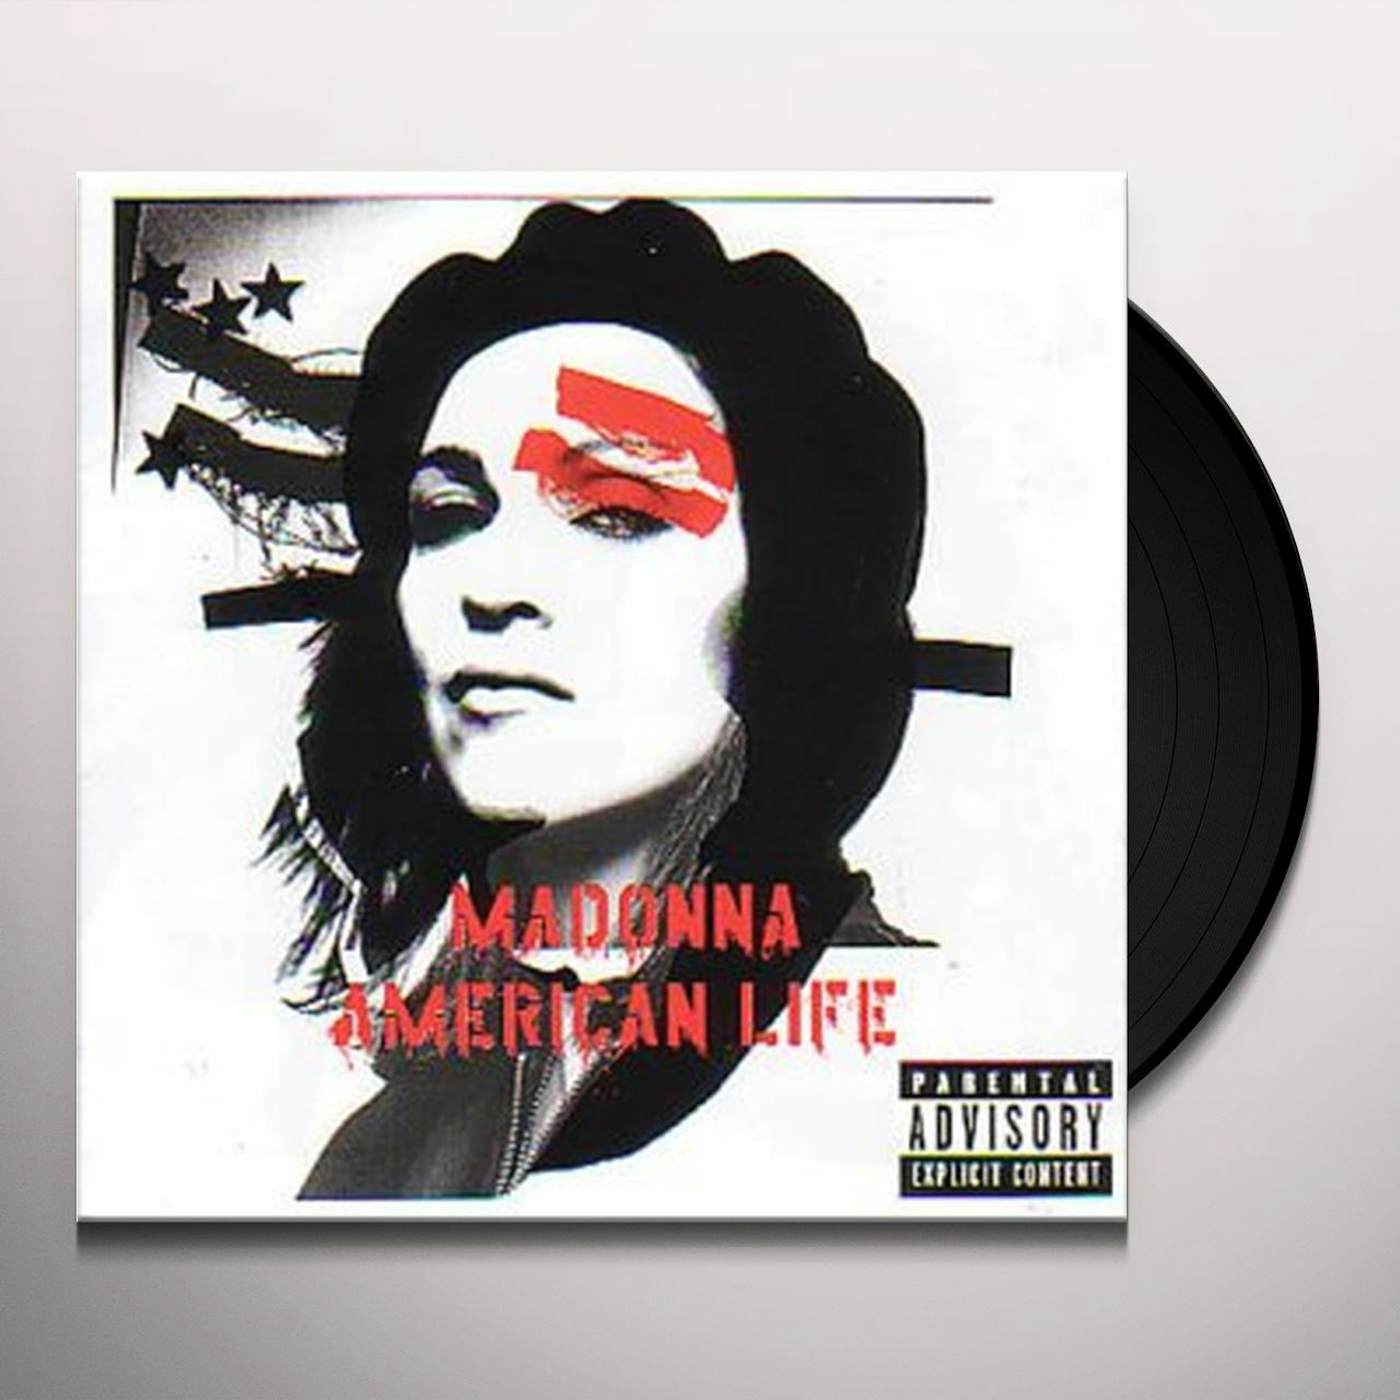 Madonna Vinyl Record